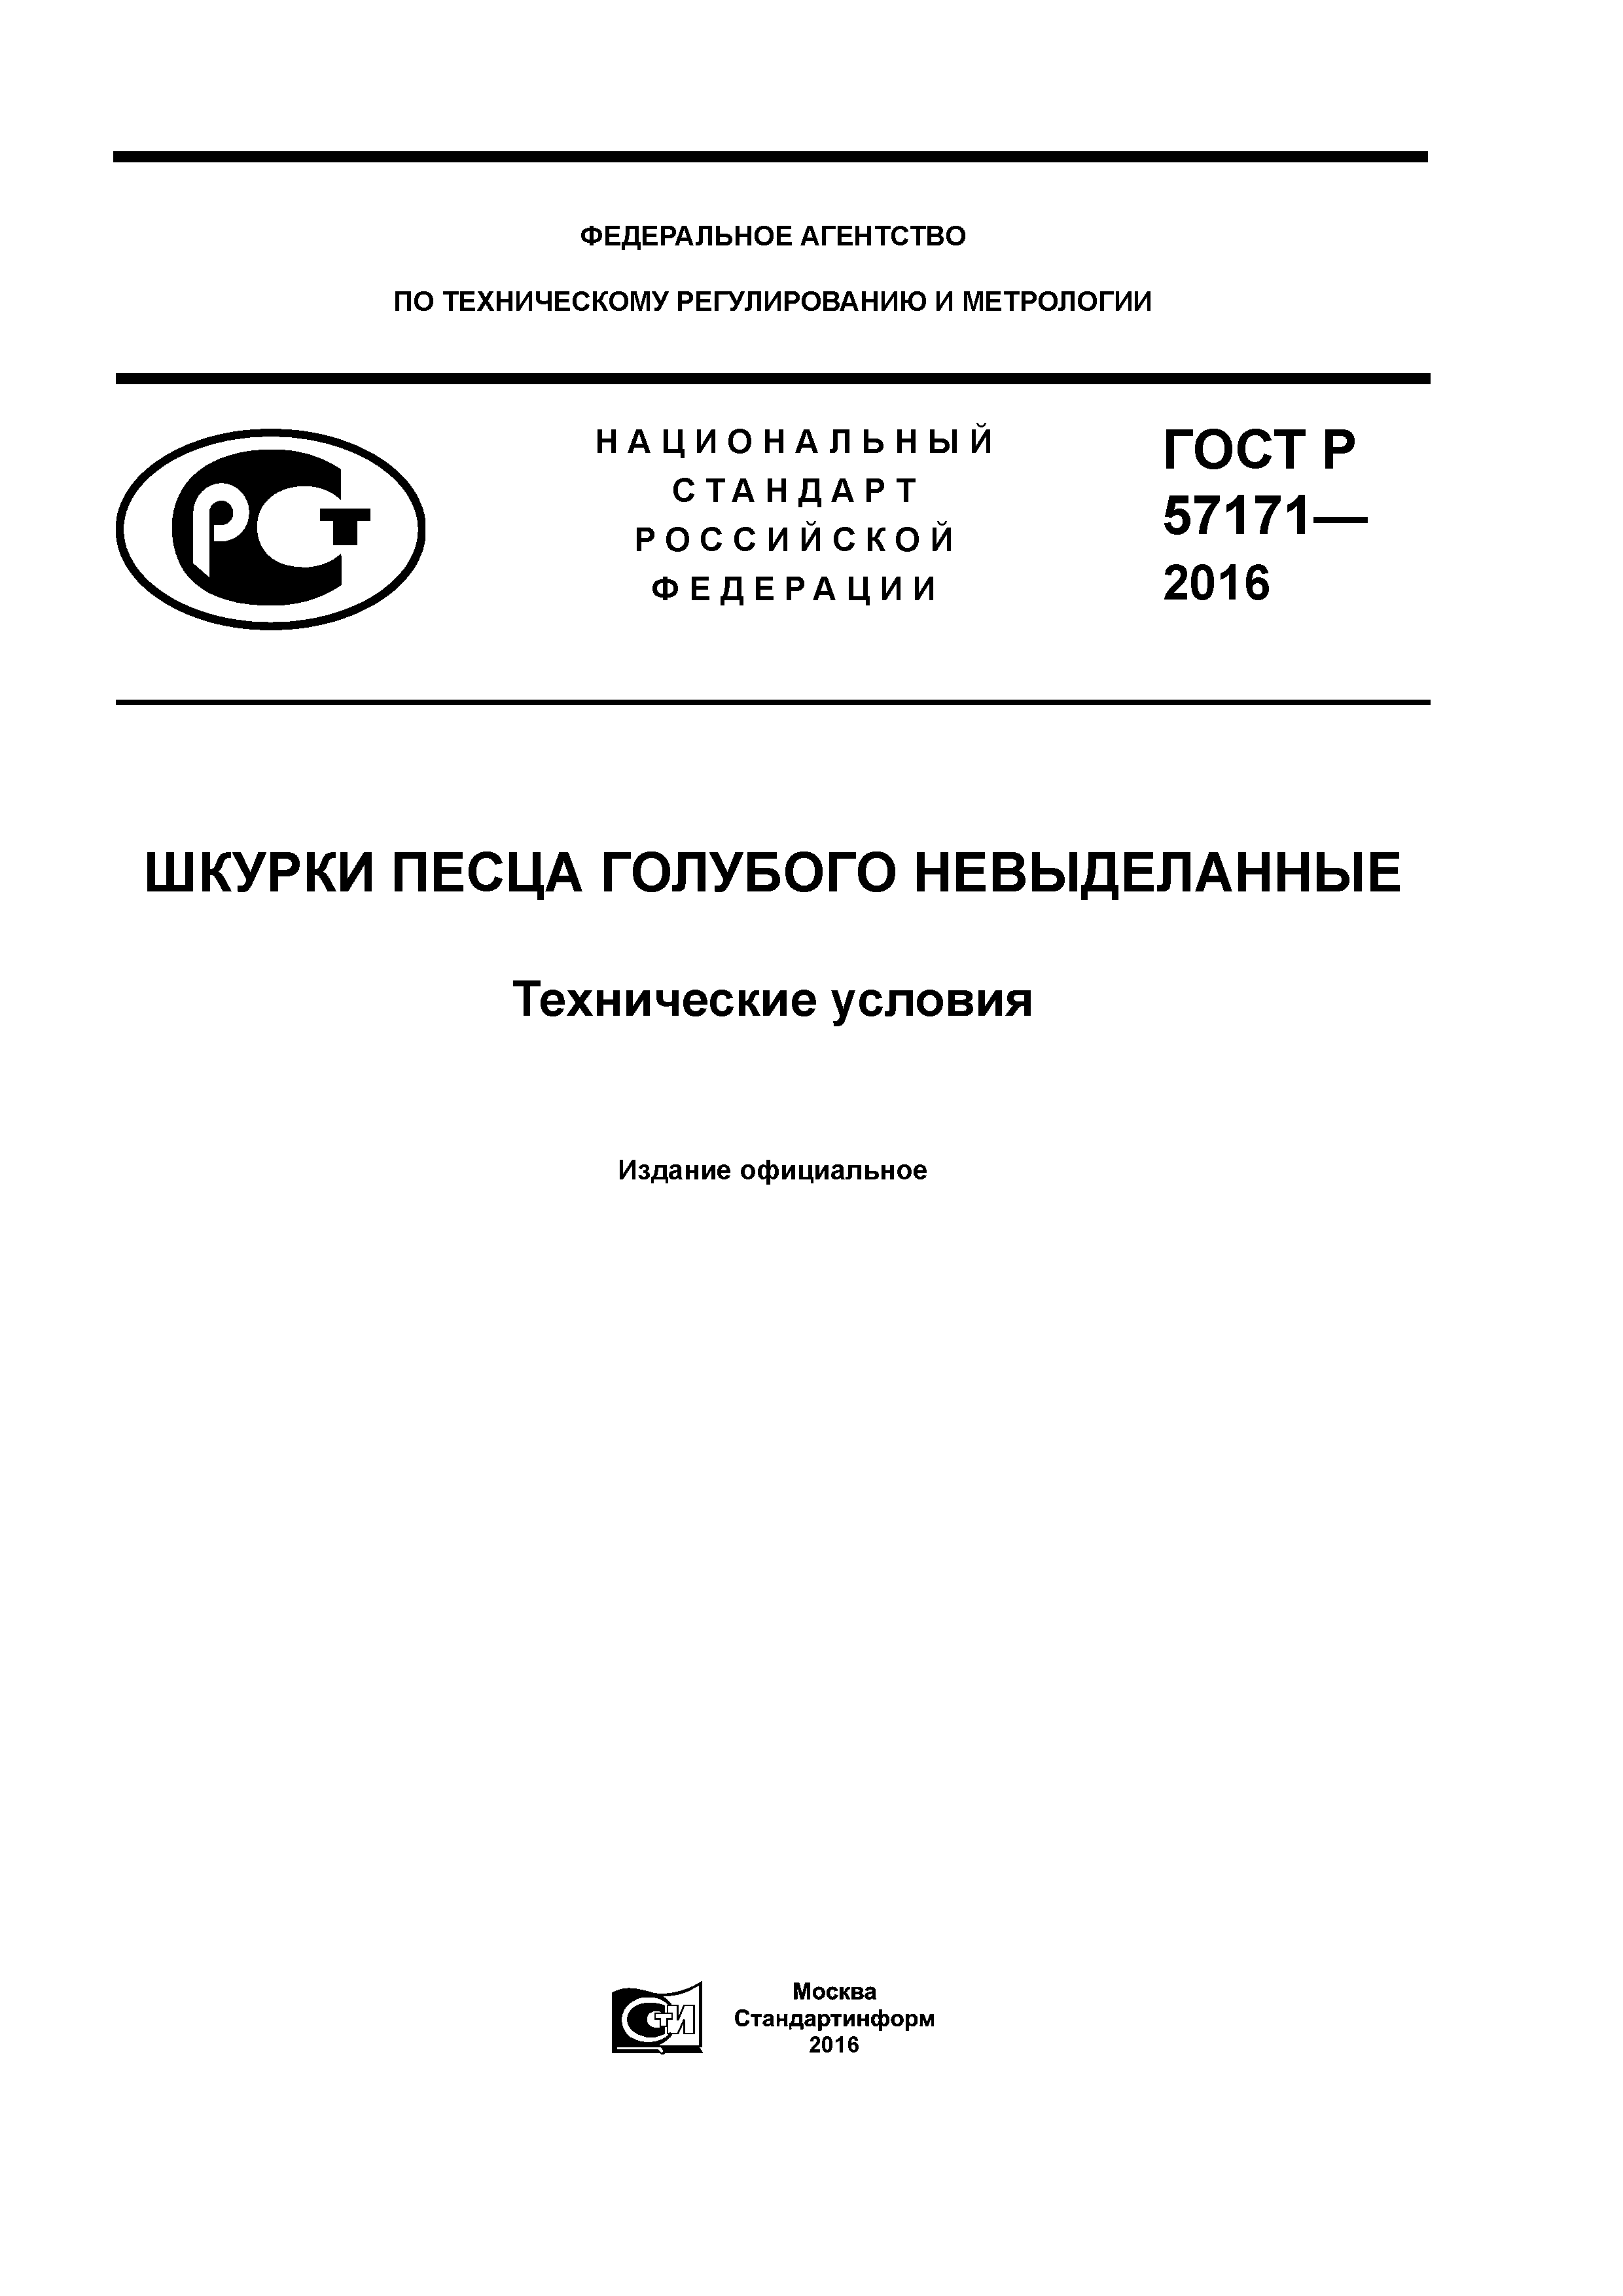 ГОСТ Р 57171-2016